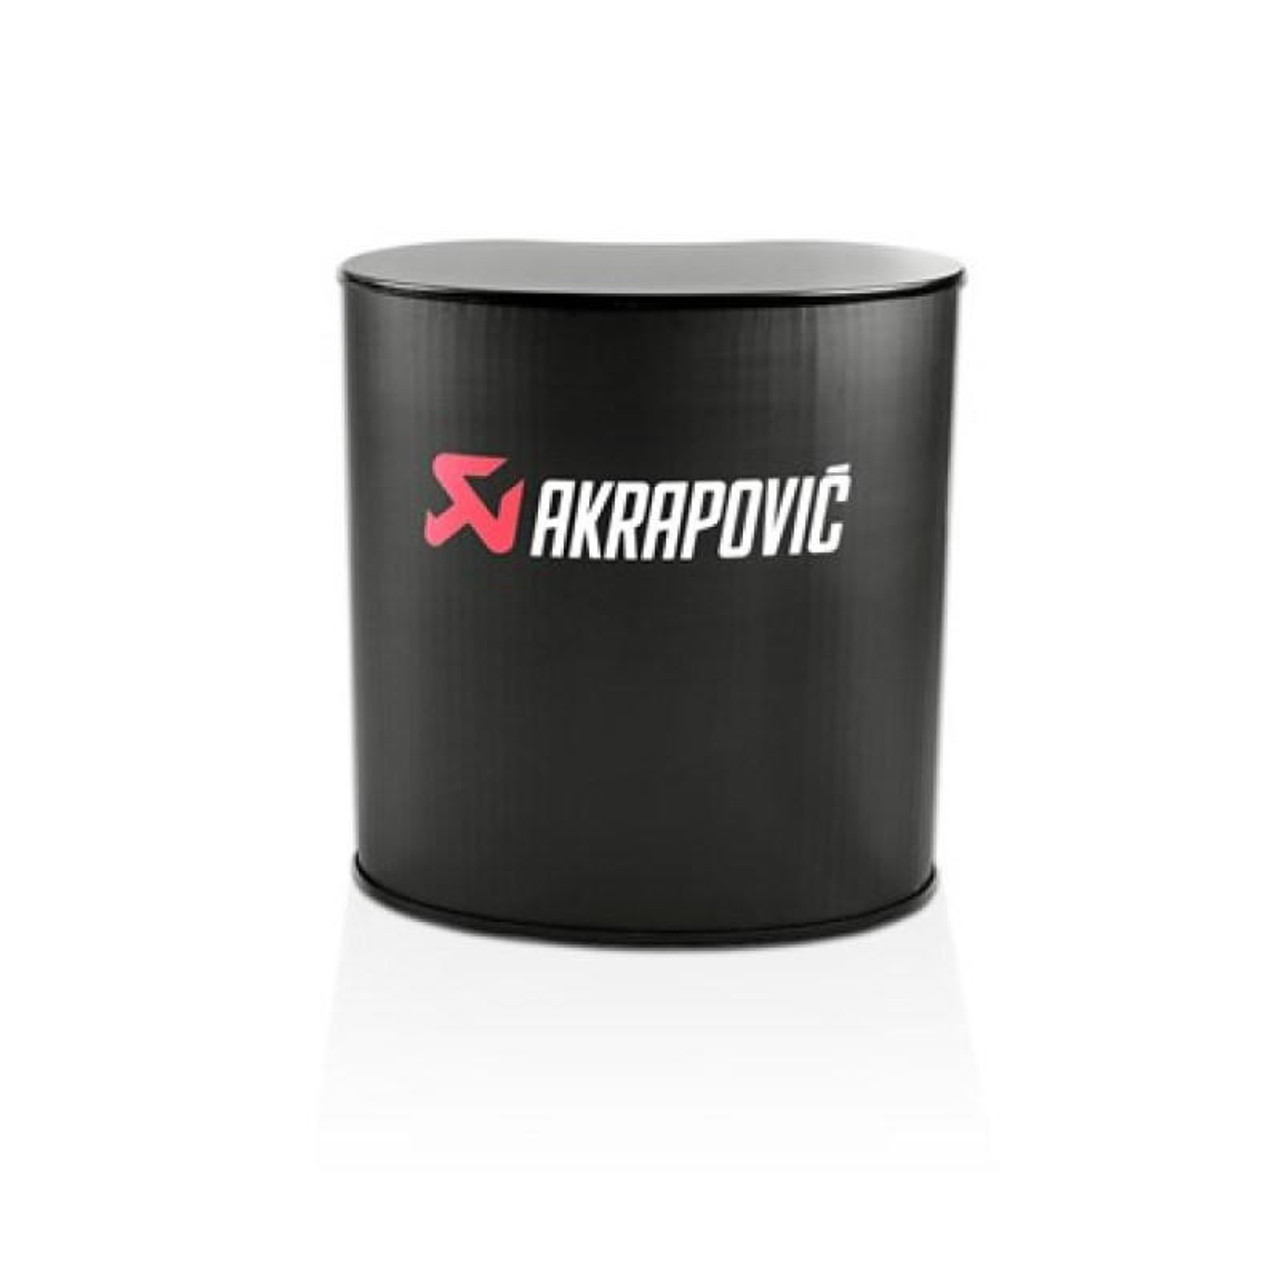  Akrapovic Promotional Counter - 801430 